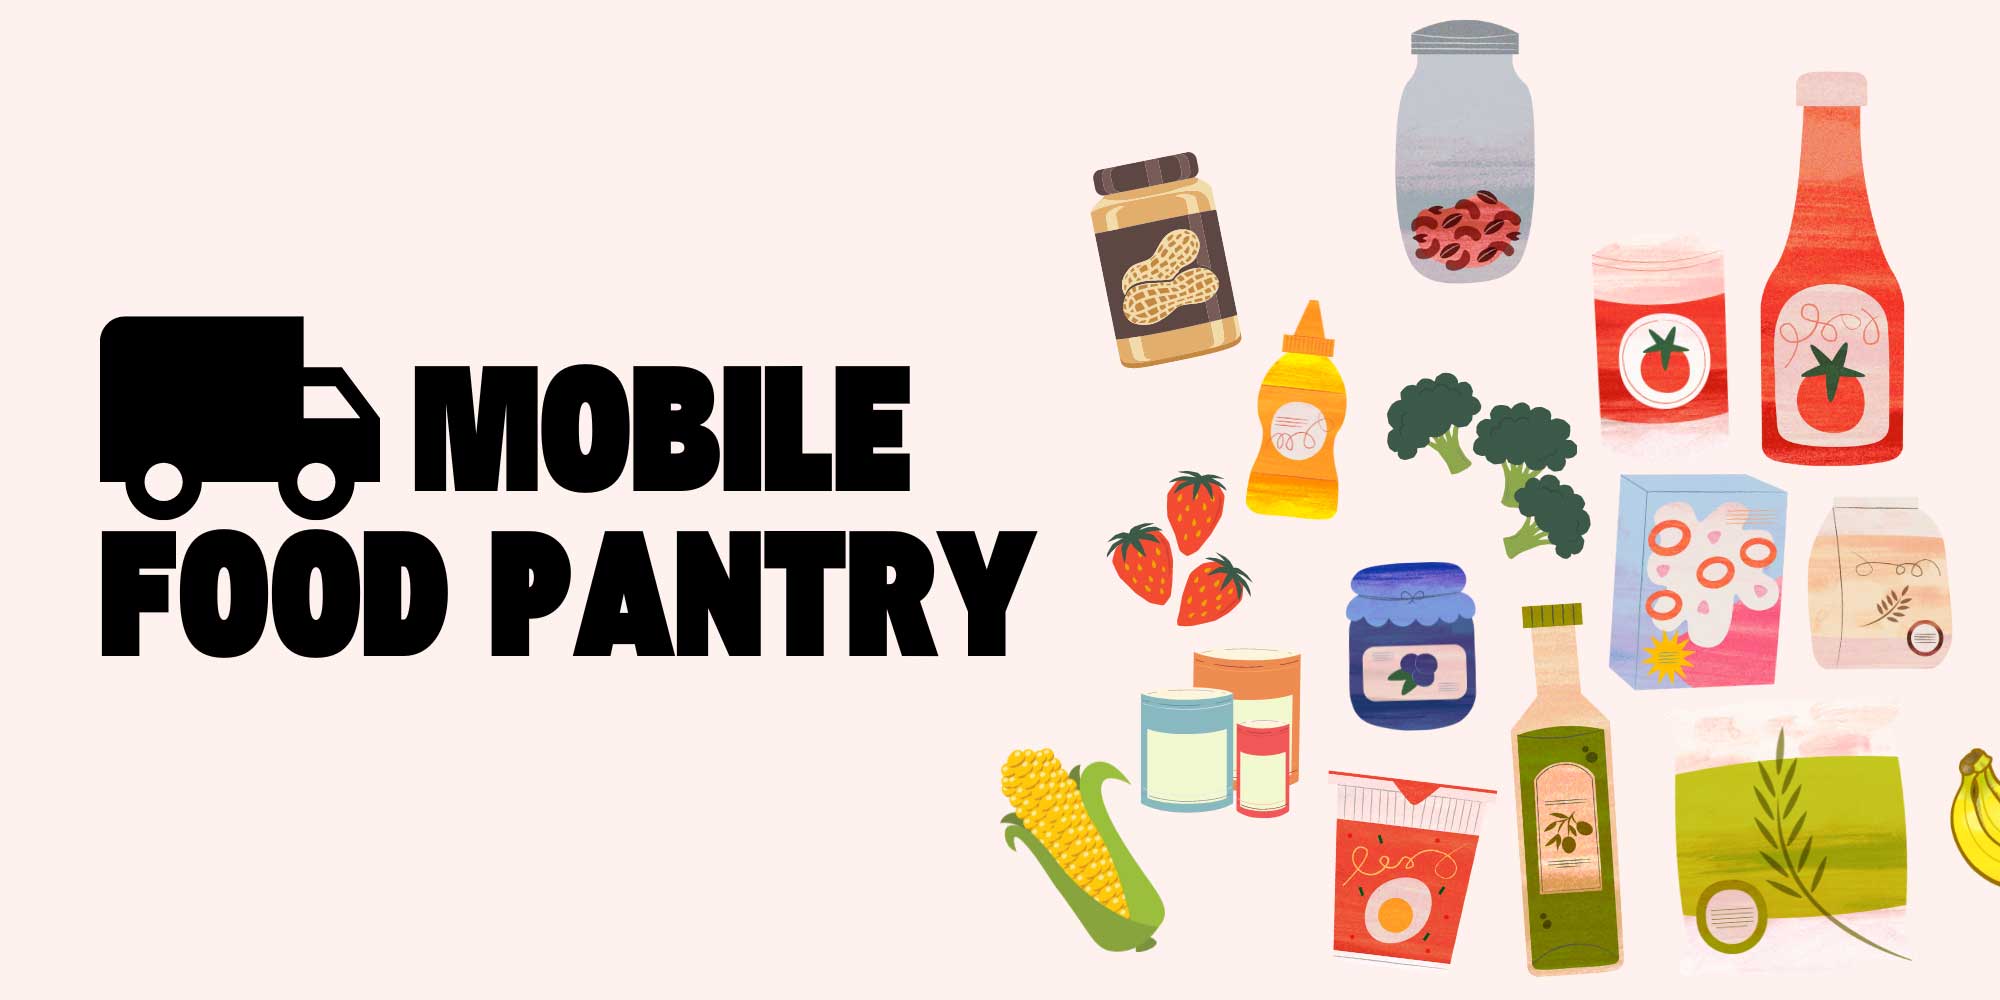 Mobile Food Pantry